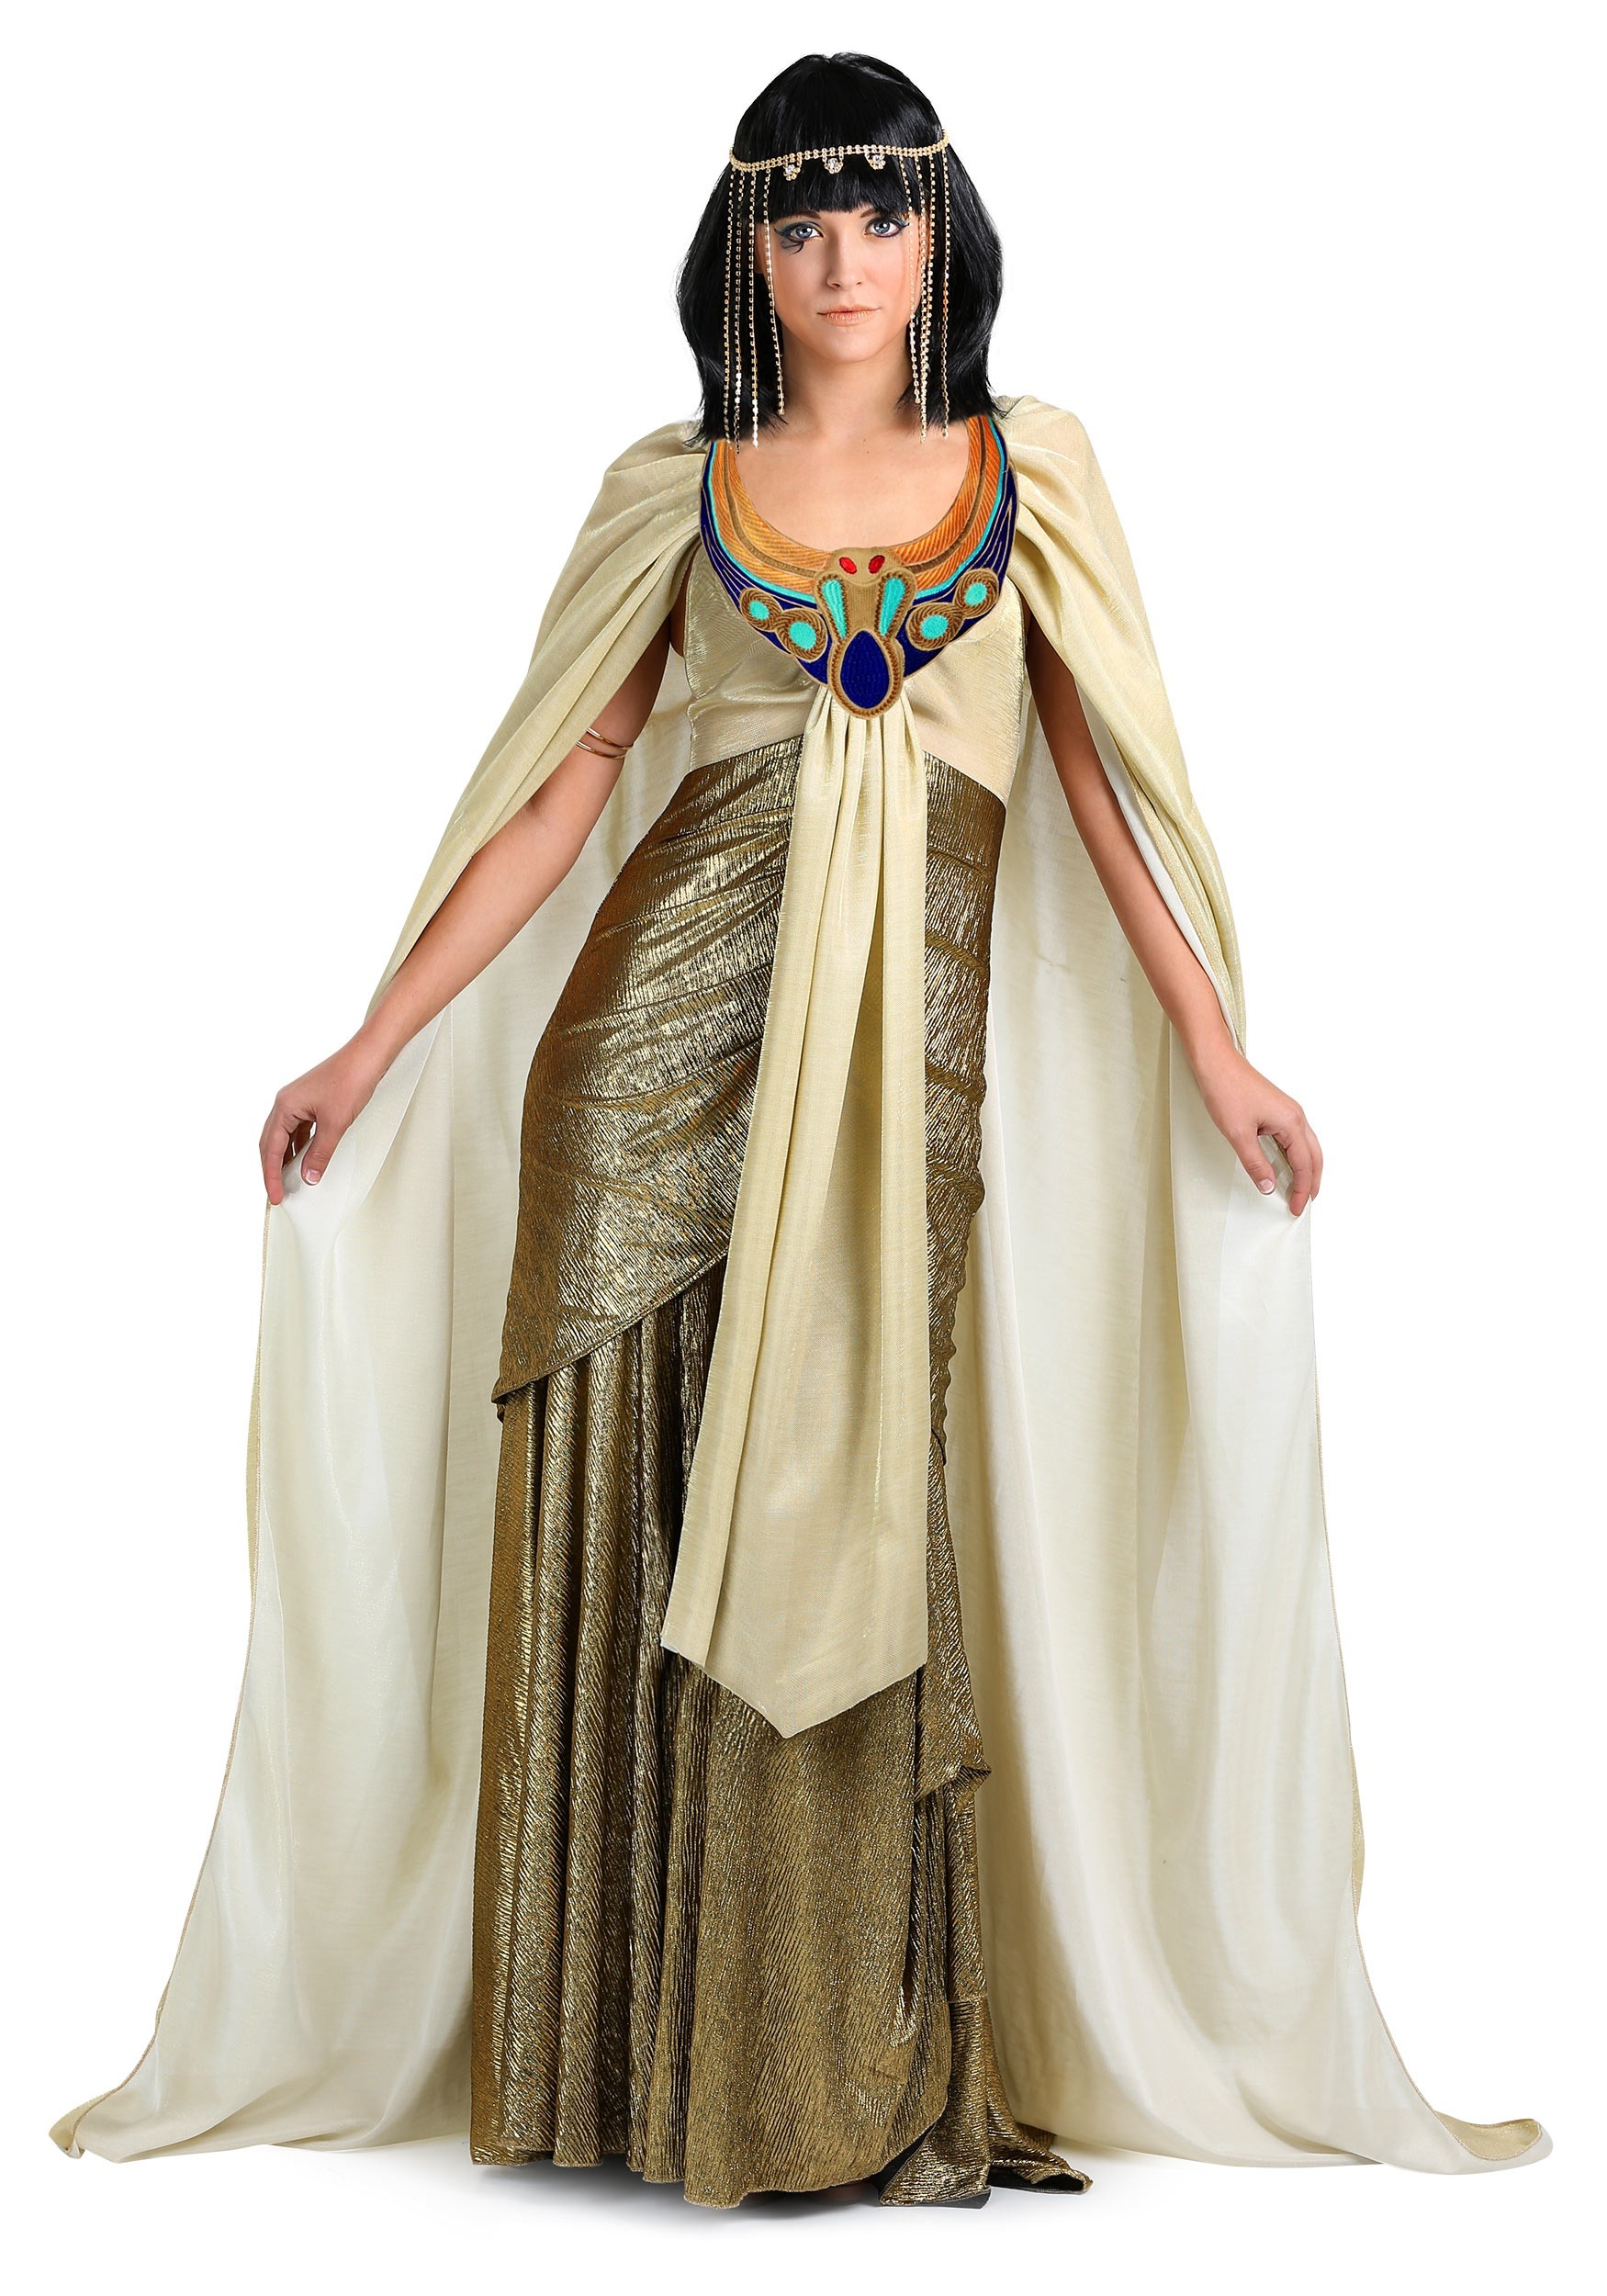 Gold Cleopatra Costume Ubicaciondepersonas Cdmx Gob Mx